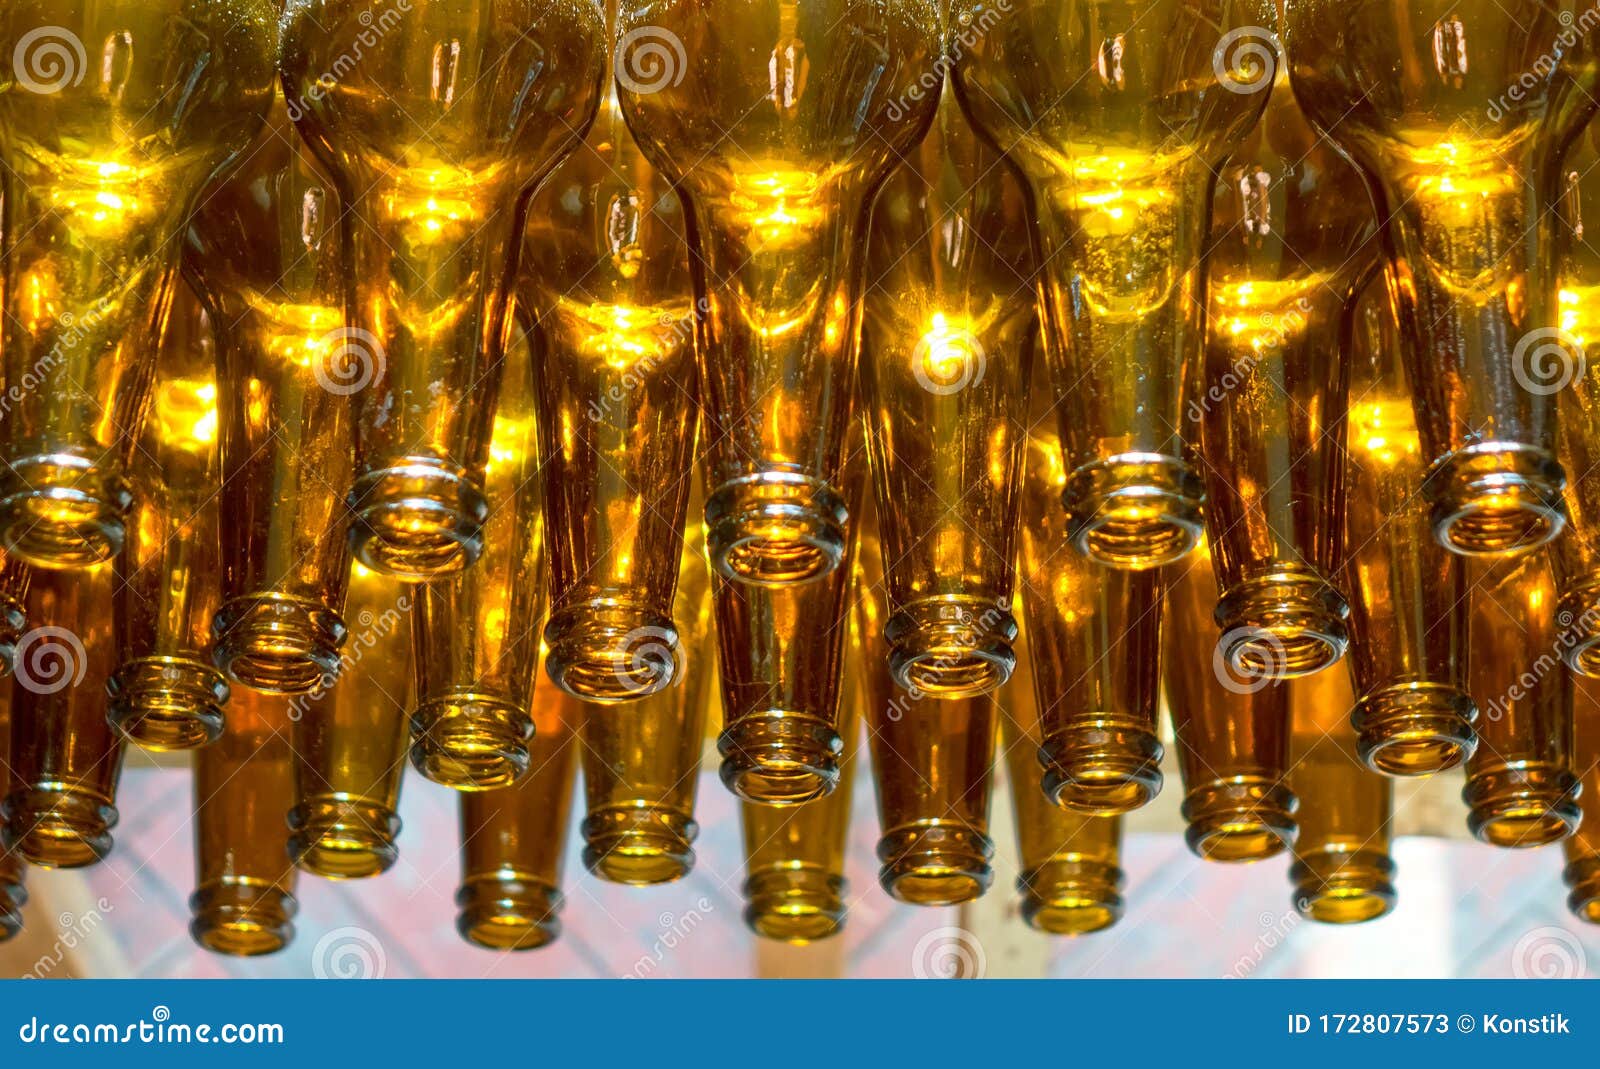 empty orange beer glass bottles necking down